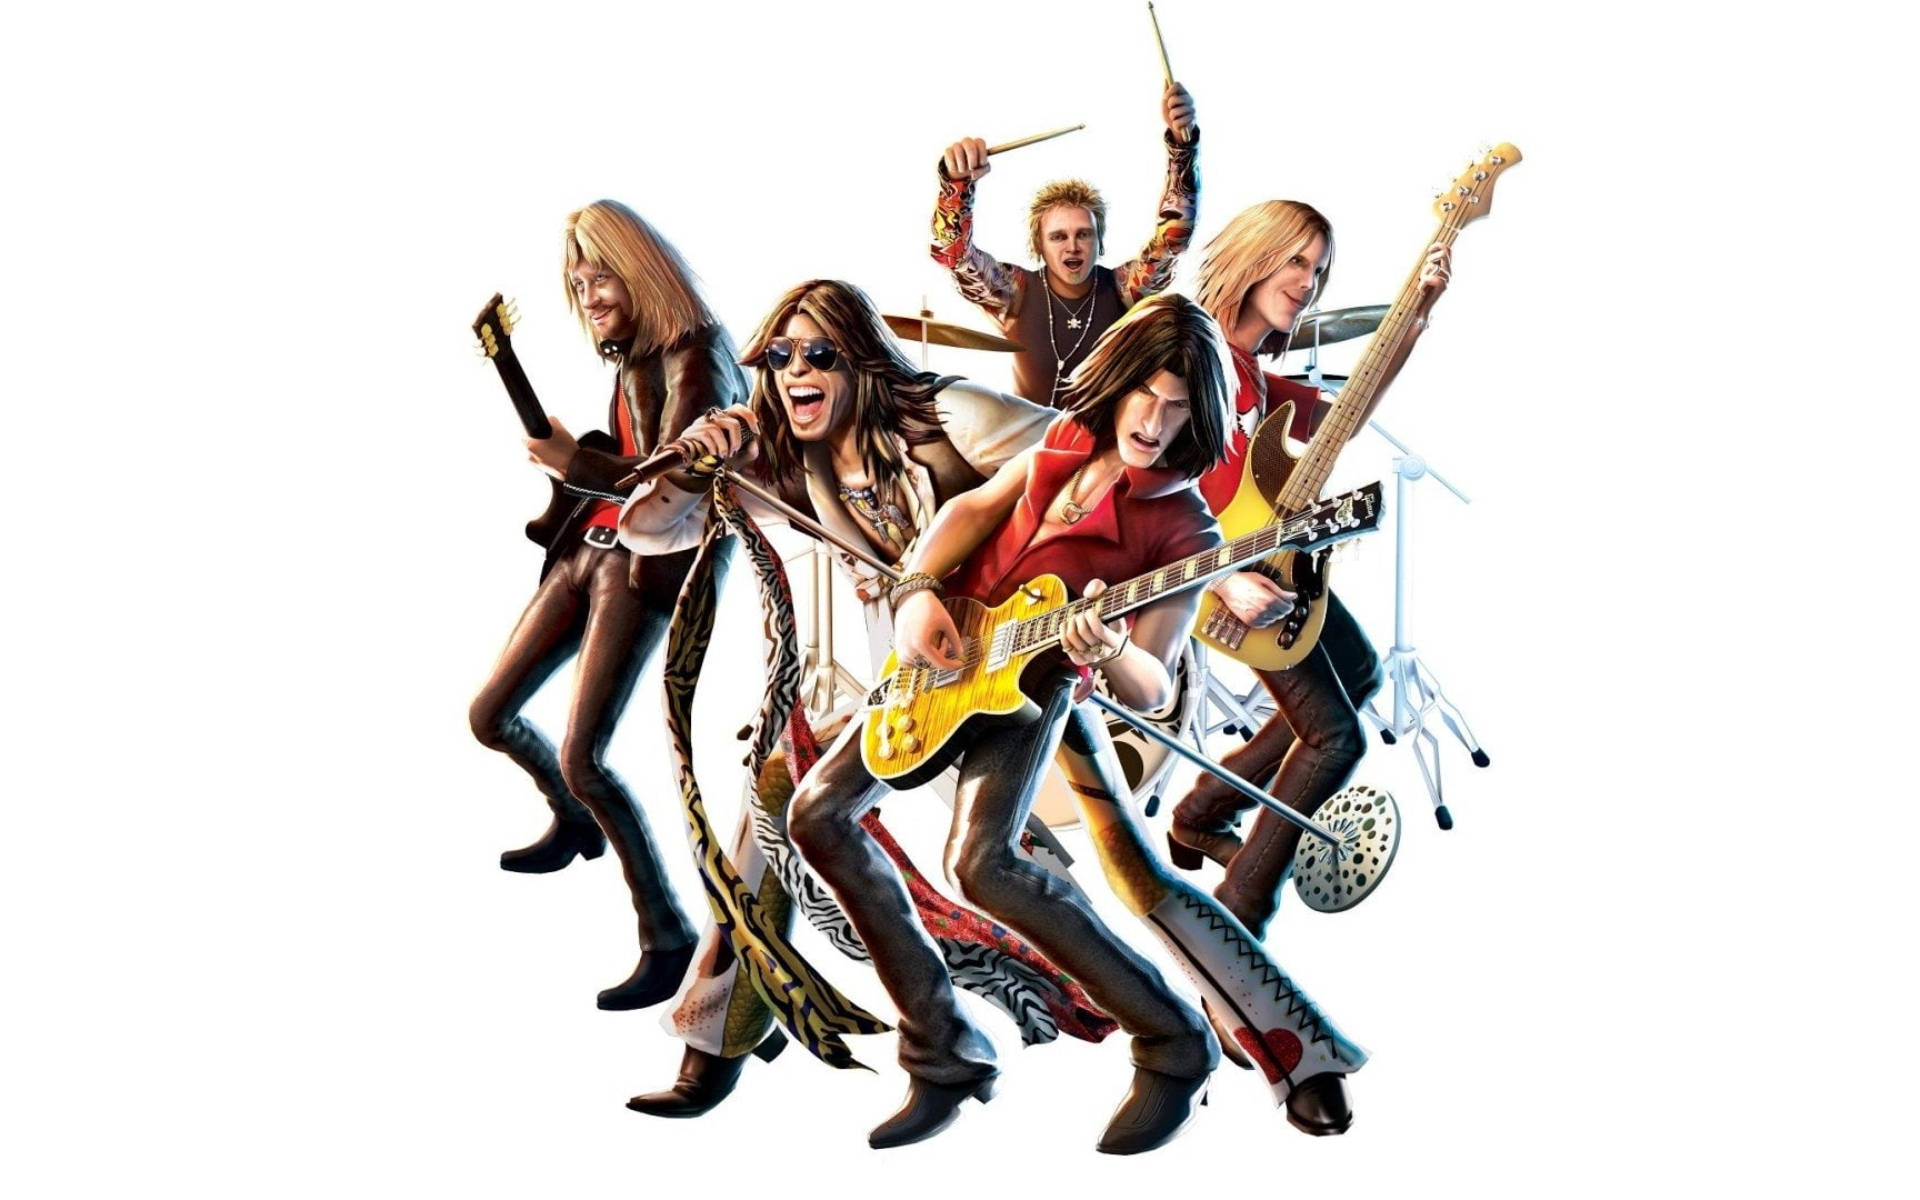 Guitar Hero Aerosmith Band